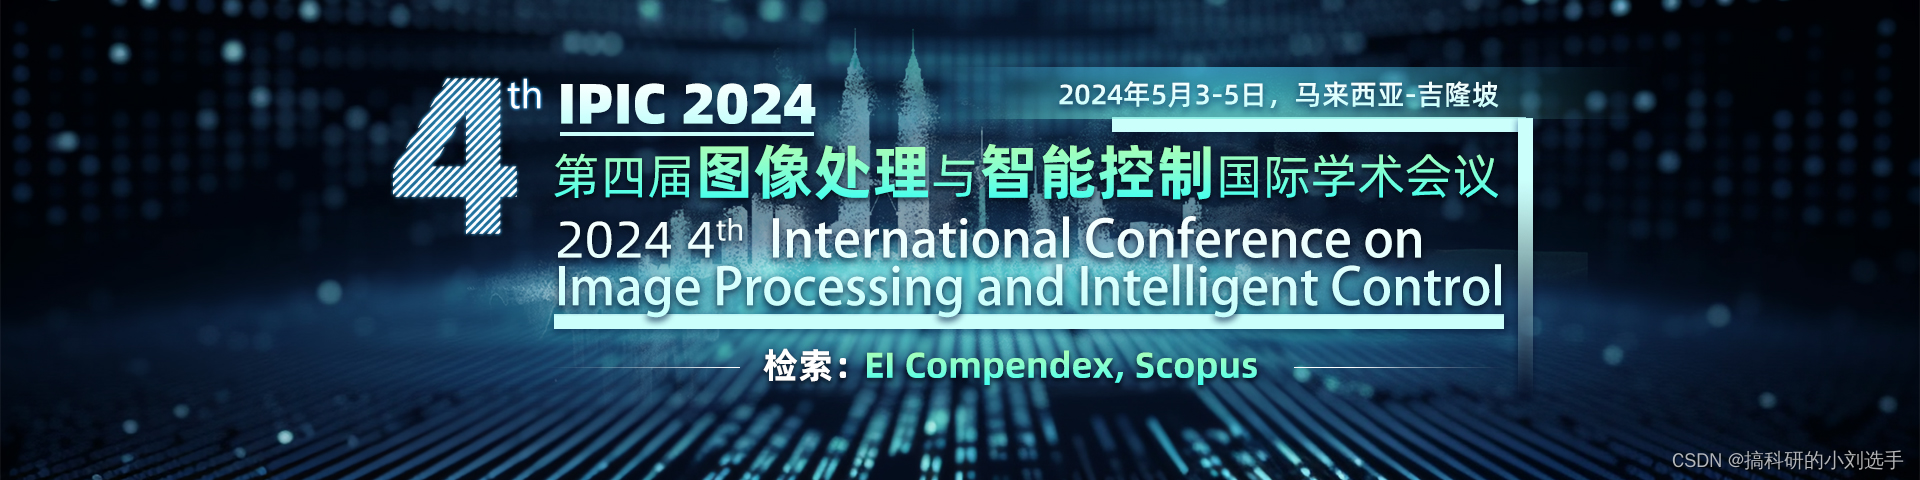 【EI会议征稿通知】第四届图像处理与智能控制国际学术会议（IPIC 2024）